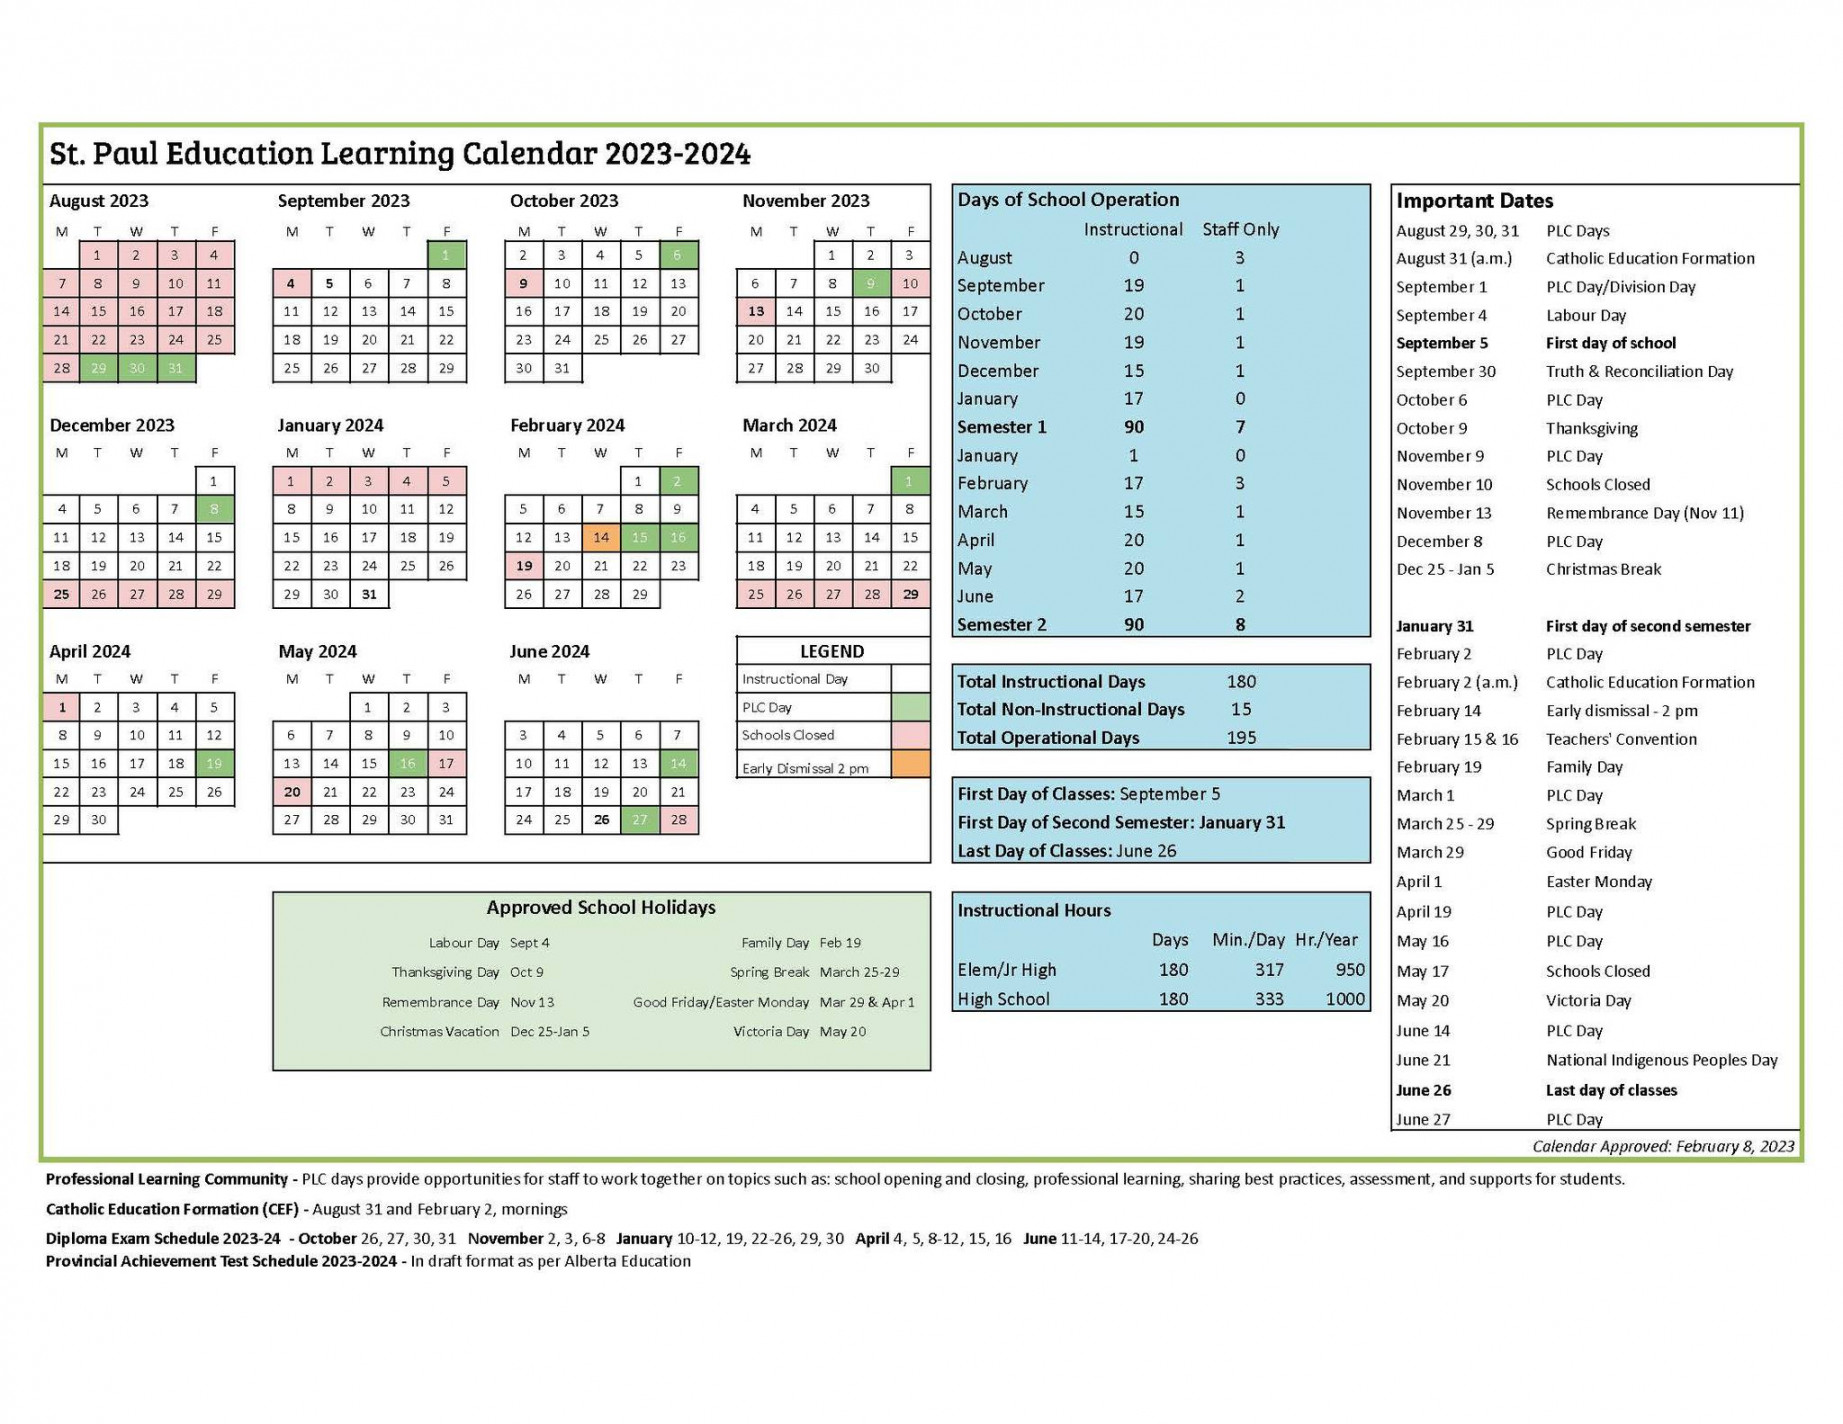 St. Paul Education approves / school calendar - LakelandToday